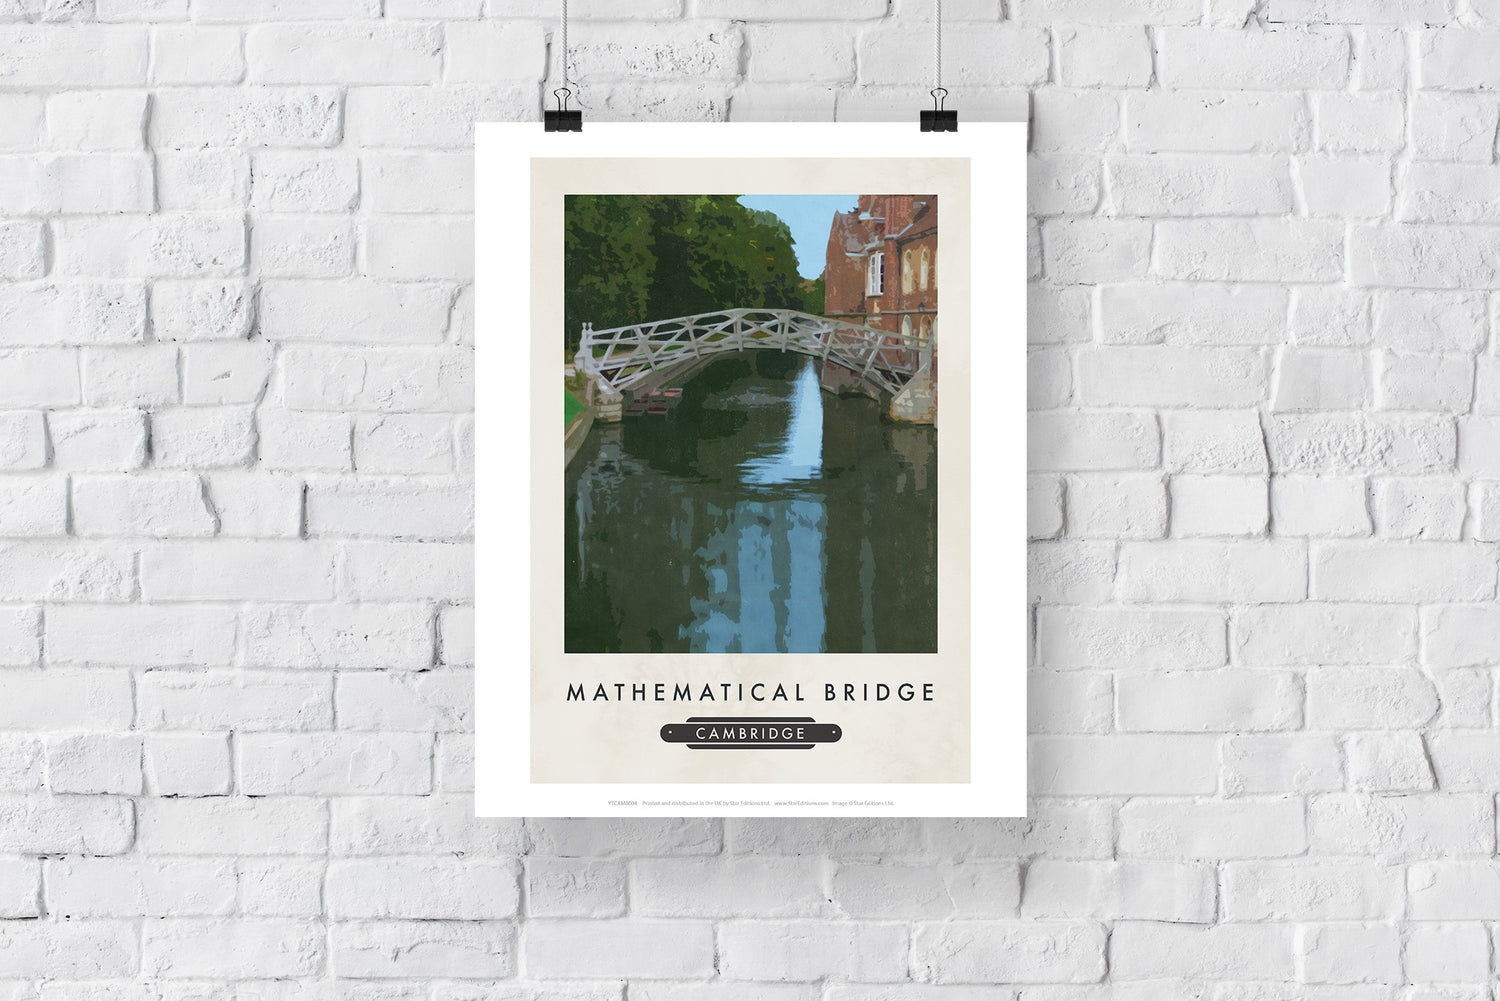 The Mathematical Bridge, Cambridge - Art Print